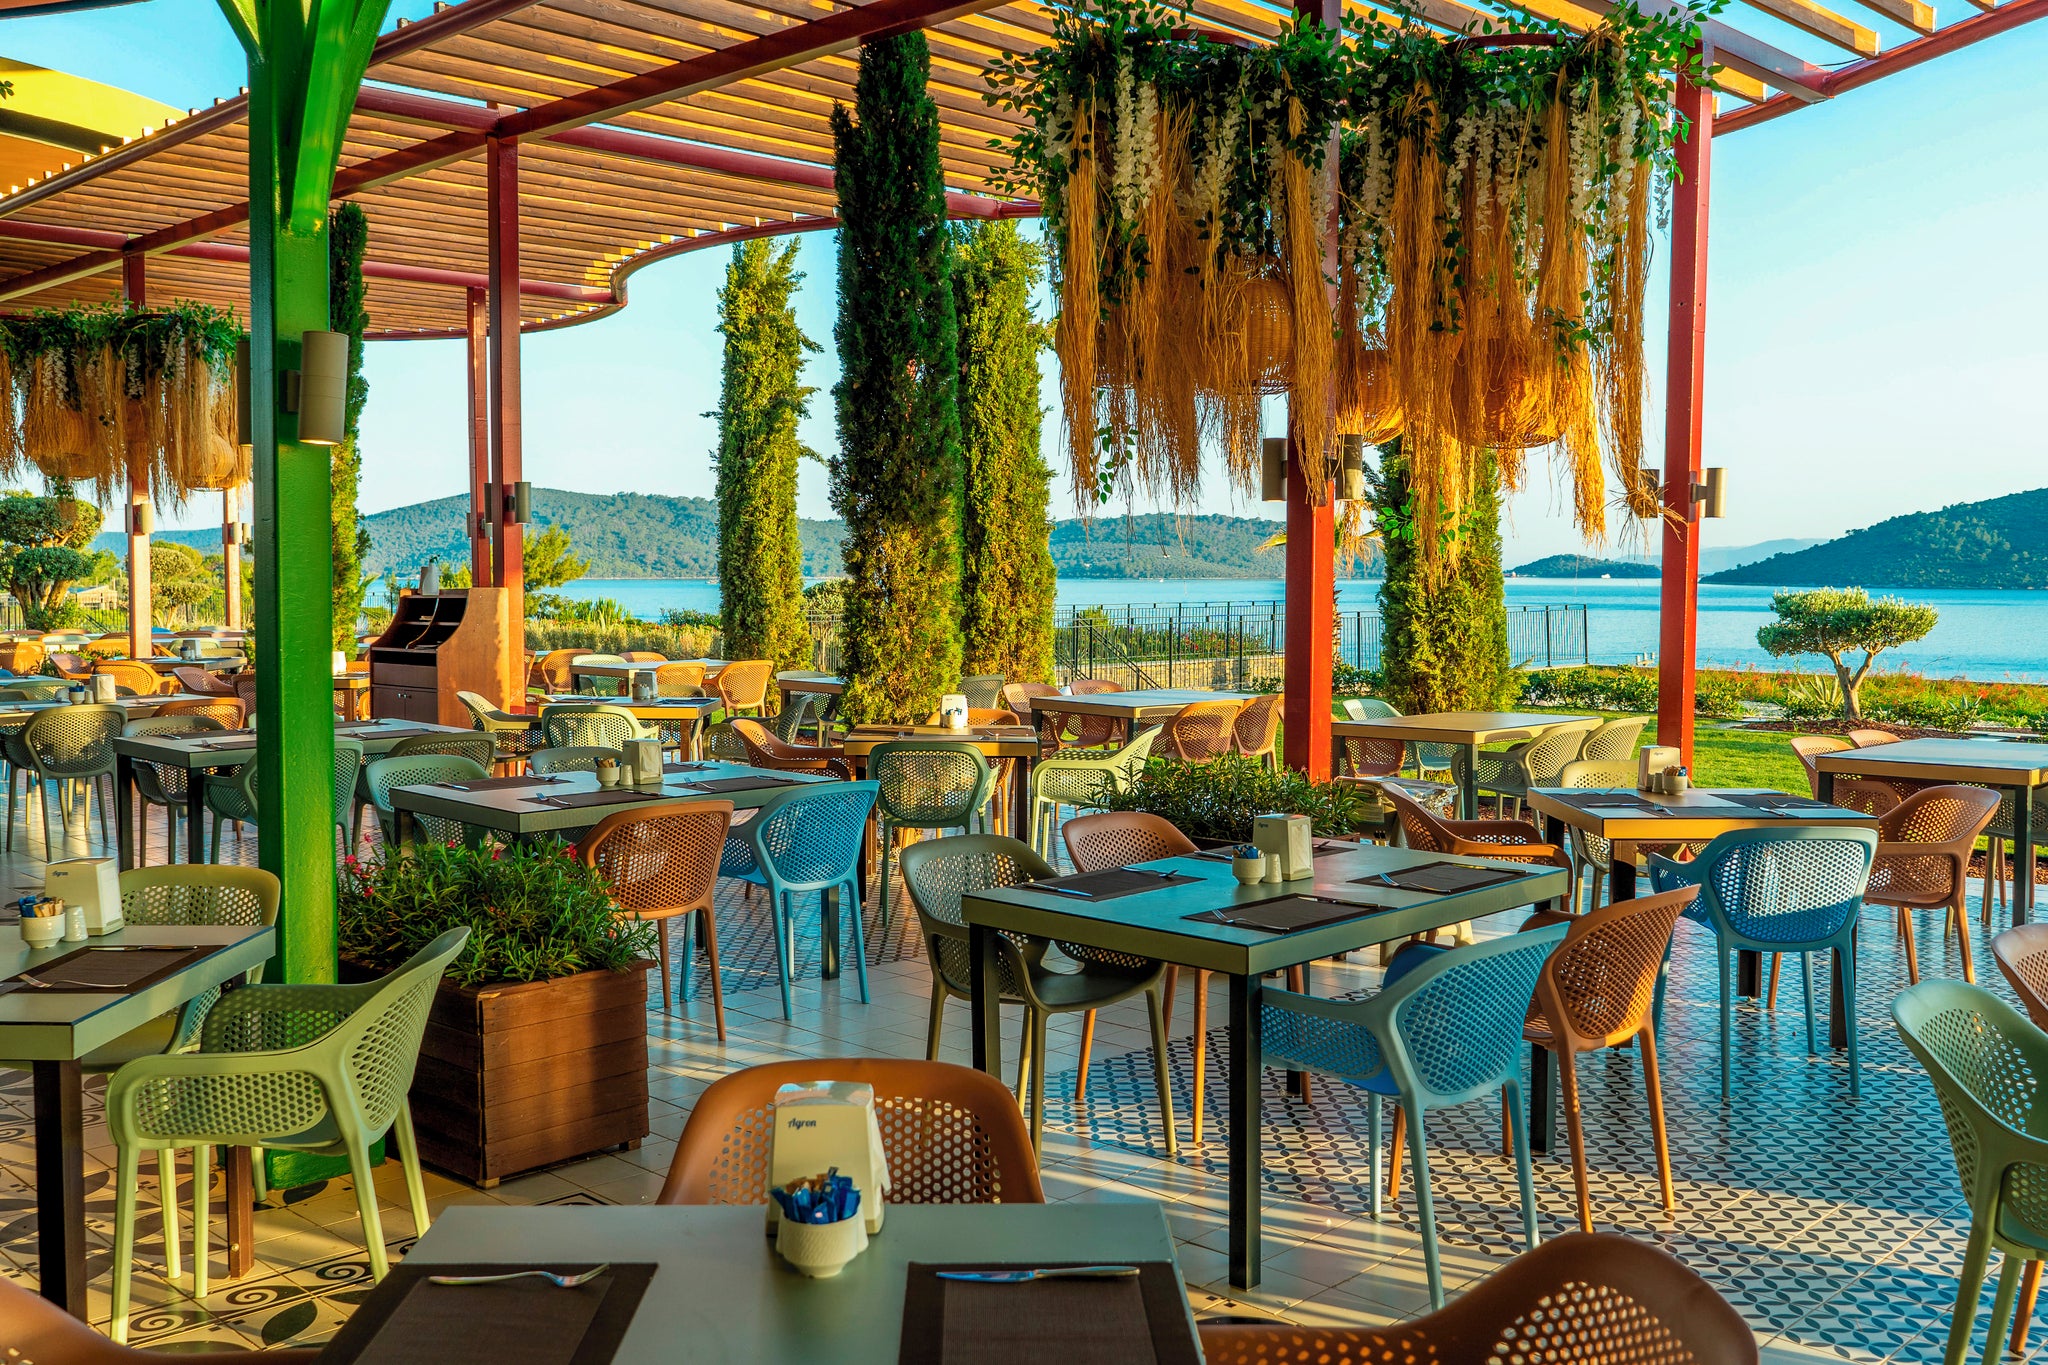 Enjoy dining al fresco within the lush, leafy surrounds of La Blanche Island resort